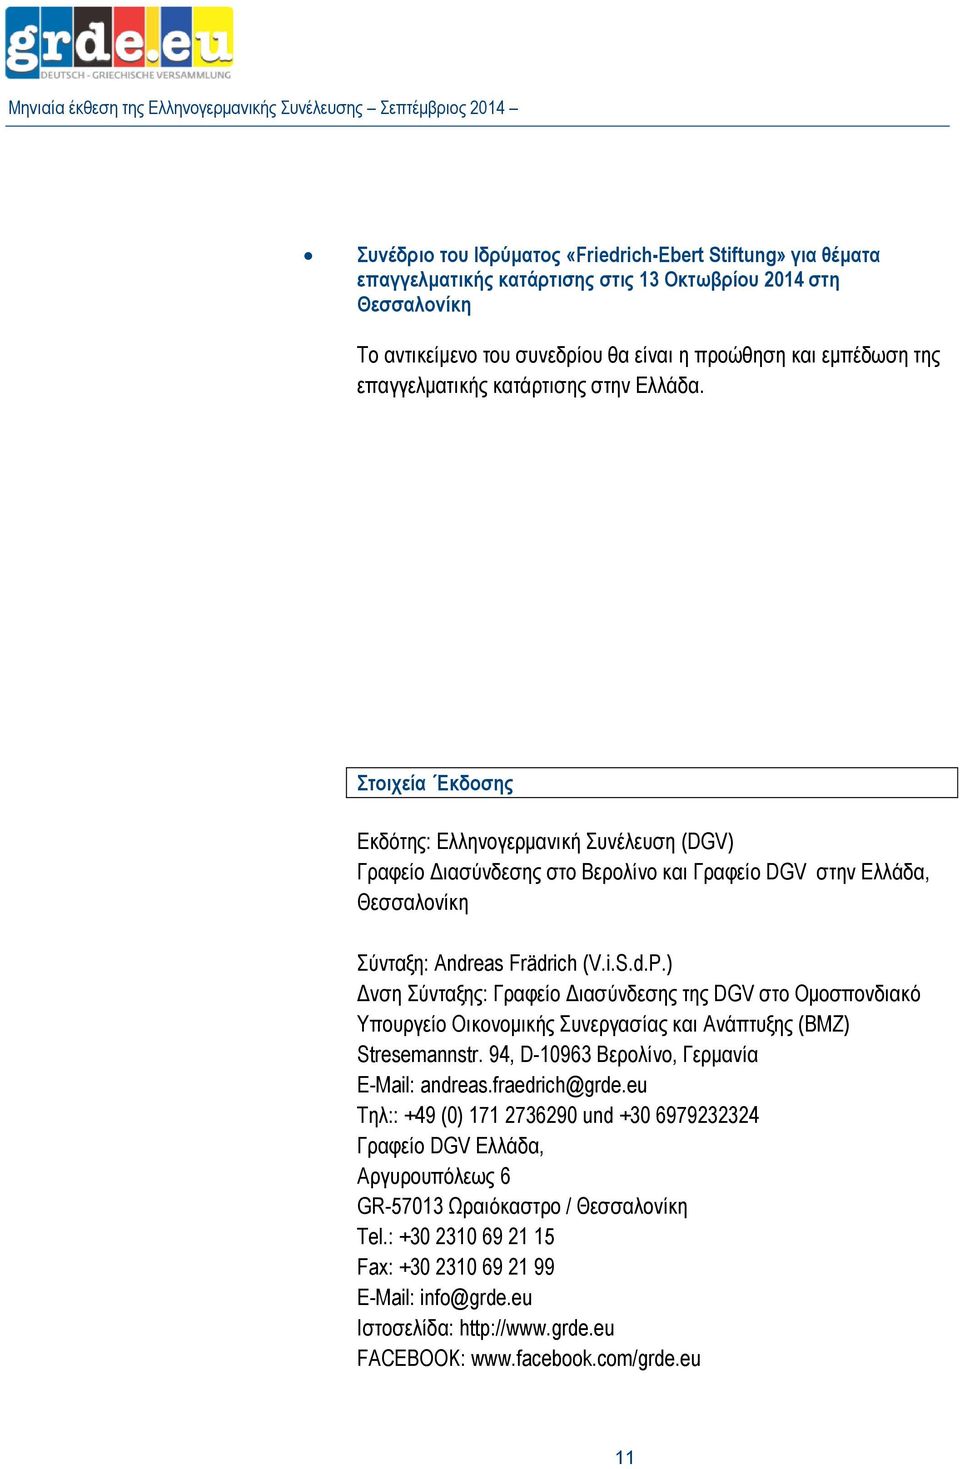 i.S.d.P.) Δνση Σύνταξης: Γραφείο Διασύνδεσης της DGV στο Ομοσπονδιακό Υπουργείο Οικονομικής Συνεργασίας και Ανάπτυξης (BMZ) Stresemannstr. 94, D-10963 Βερολίνο, Γερμανία E-Mail: andreas.